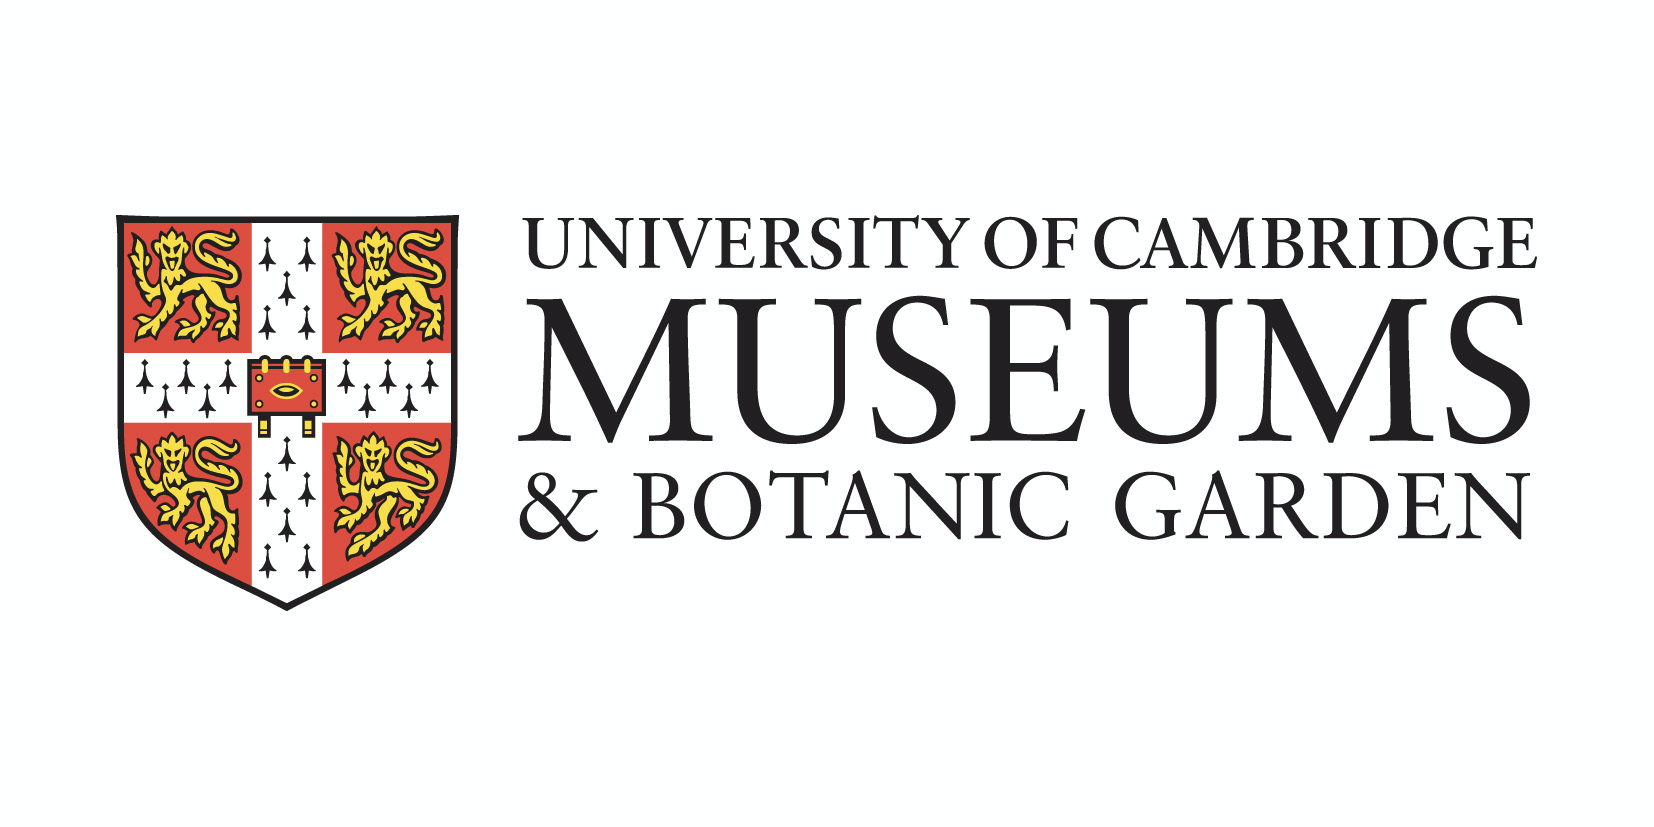 The University of Cambridge Museums and Botanic Garden logo